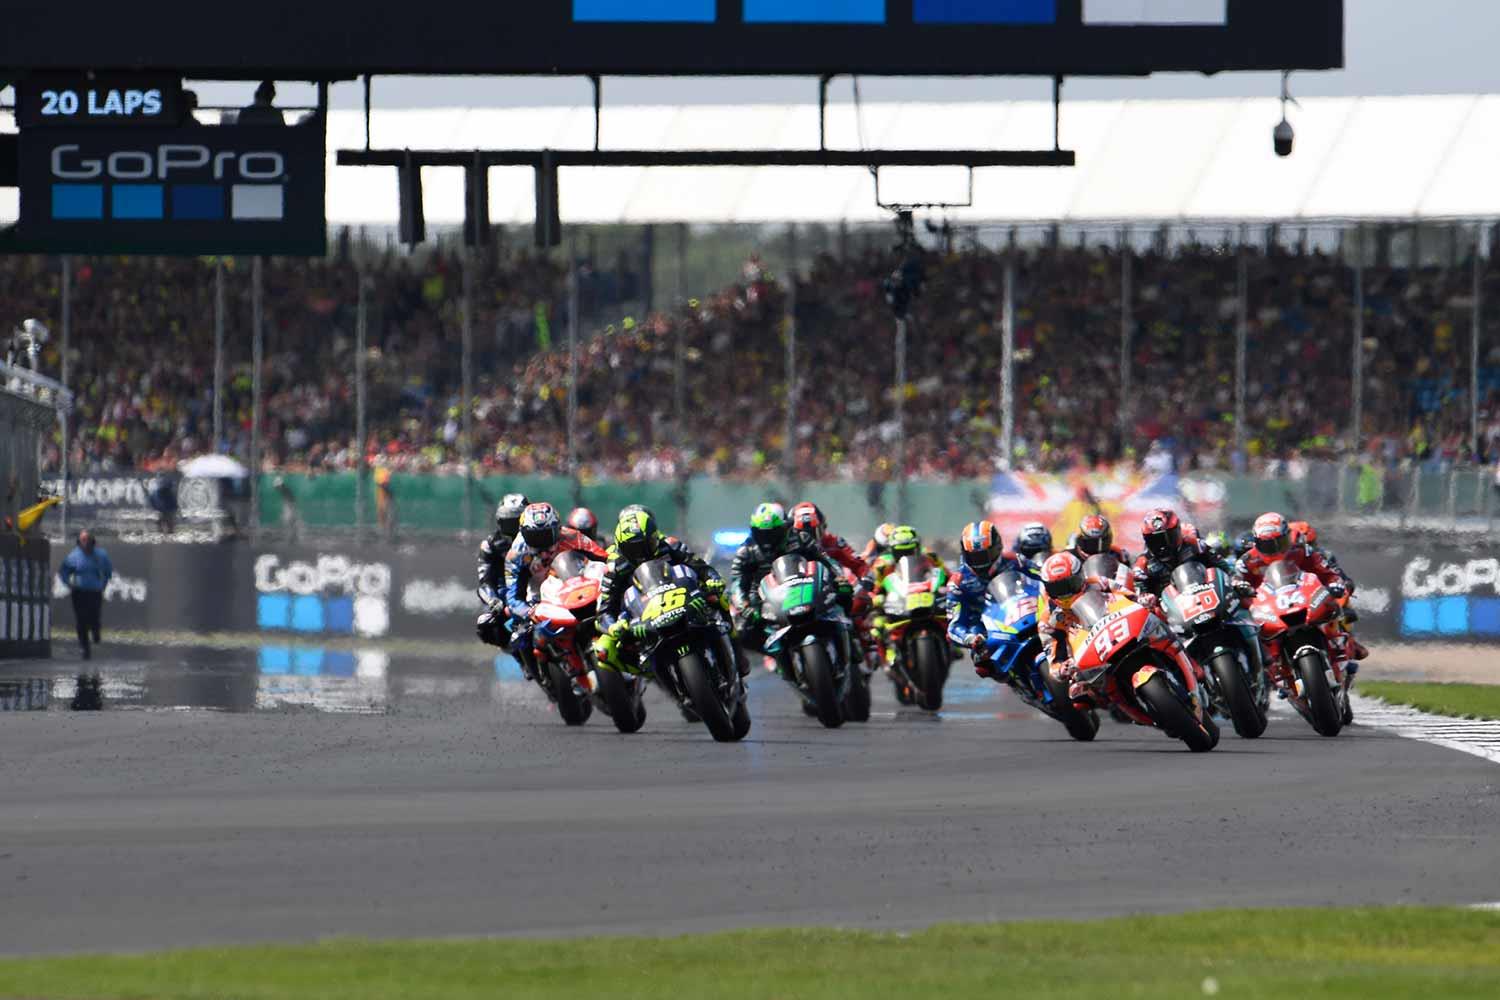 MotoGP 2021 British Grand Prix to be broadcast live on ITV MCN